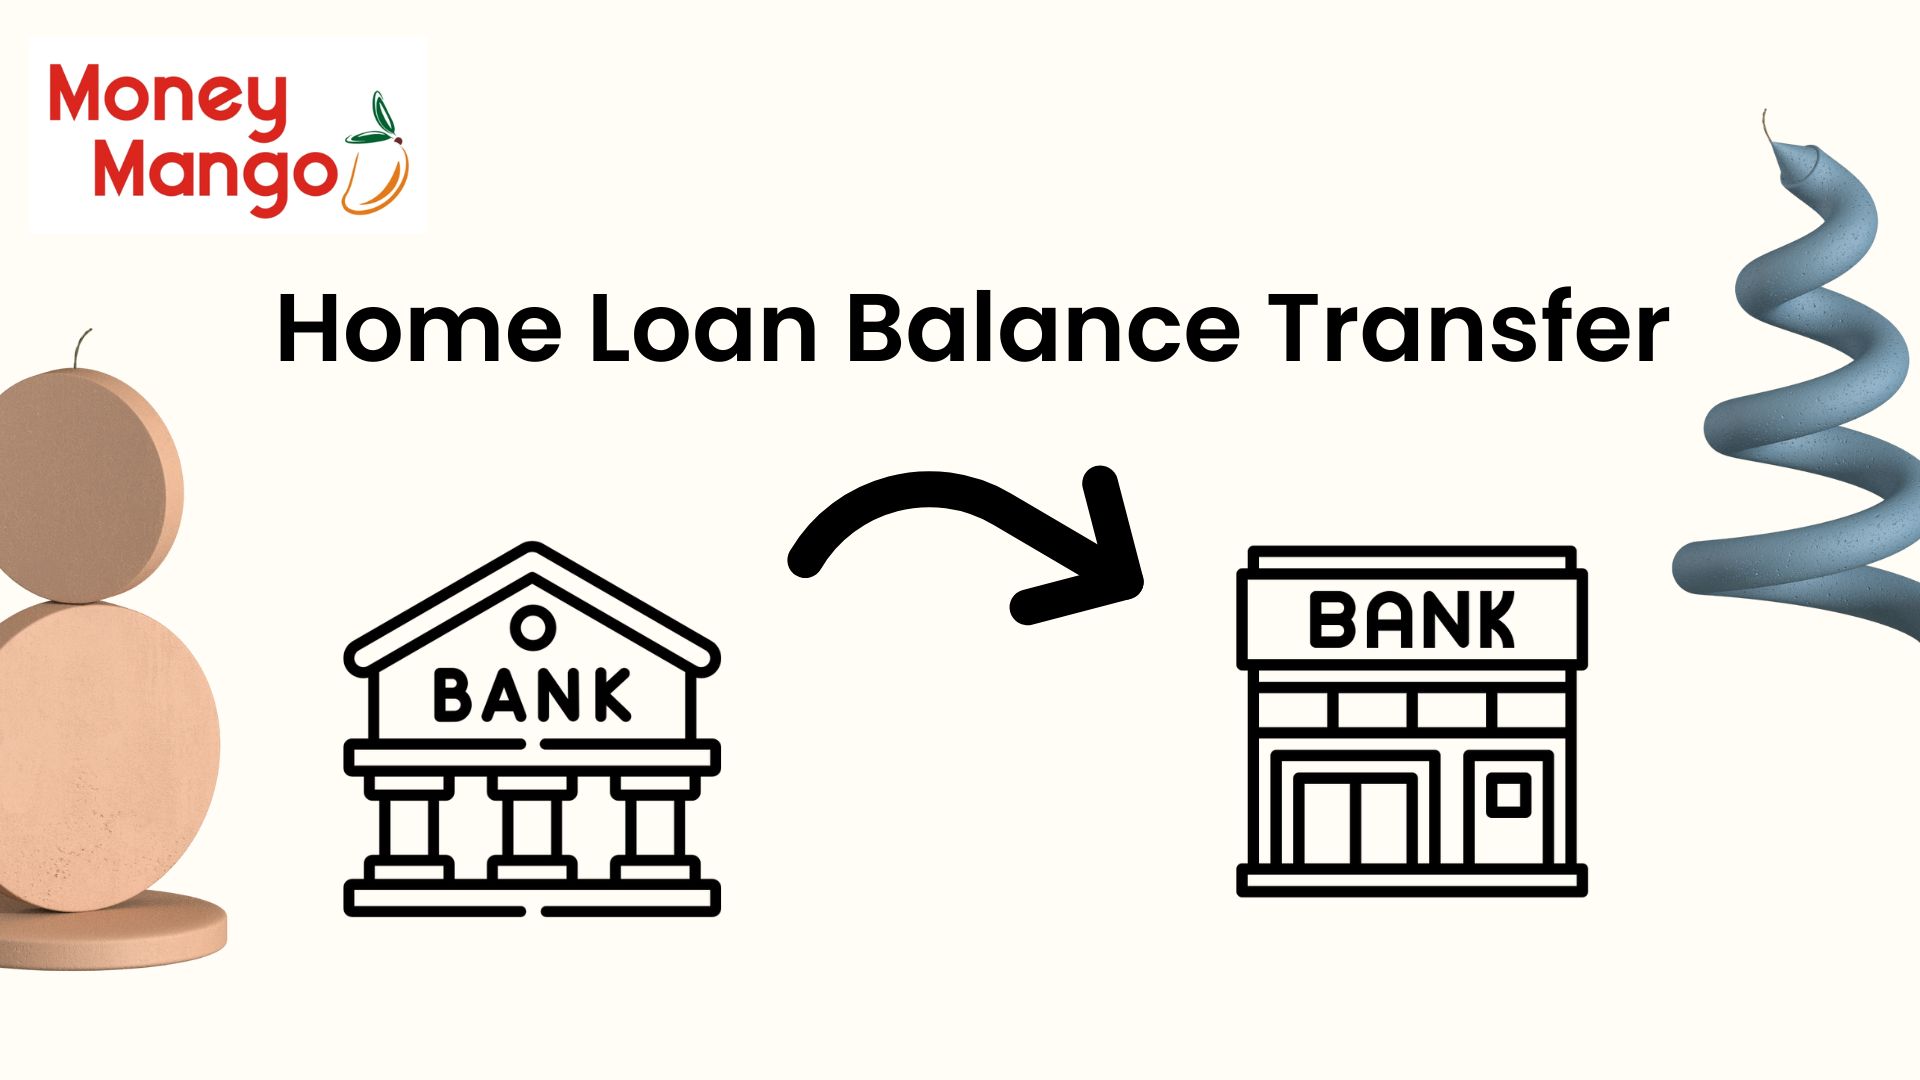 Money Mango Home Loan Balance Transfer